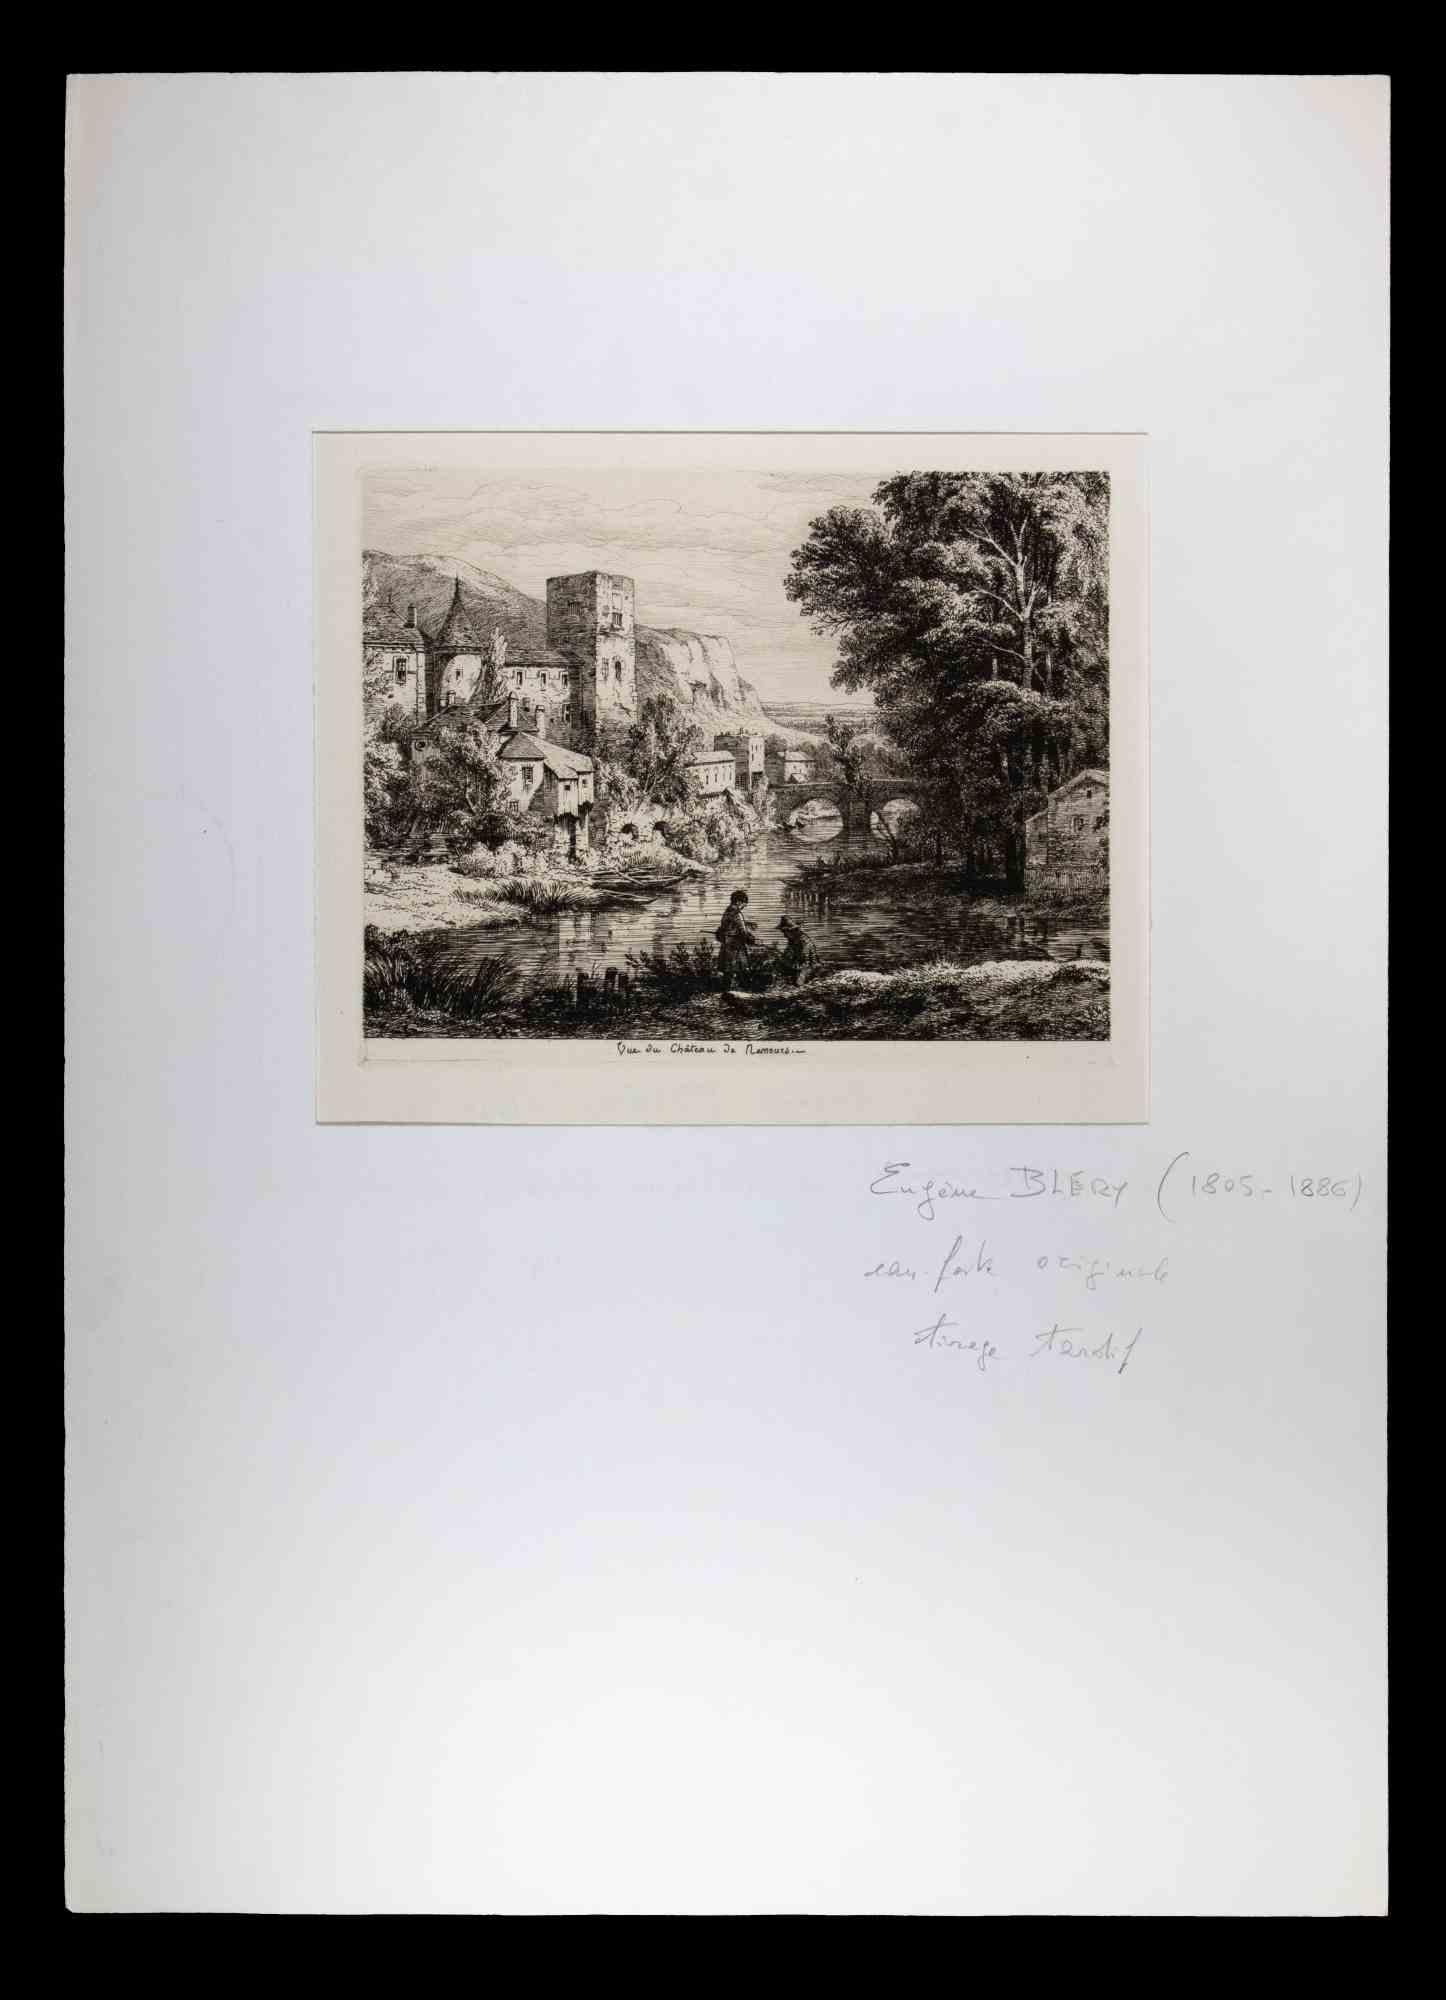 Eugene Blery Landscape Print - View of Castle of Nemours - Original Etching by Eugène Bléry - Mid 19th Century